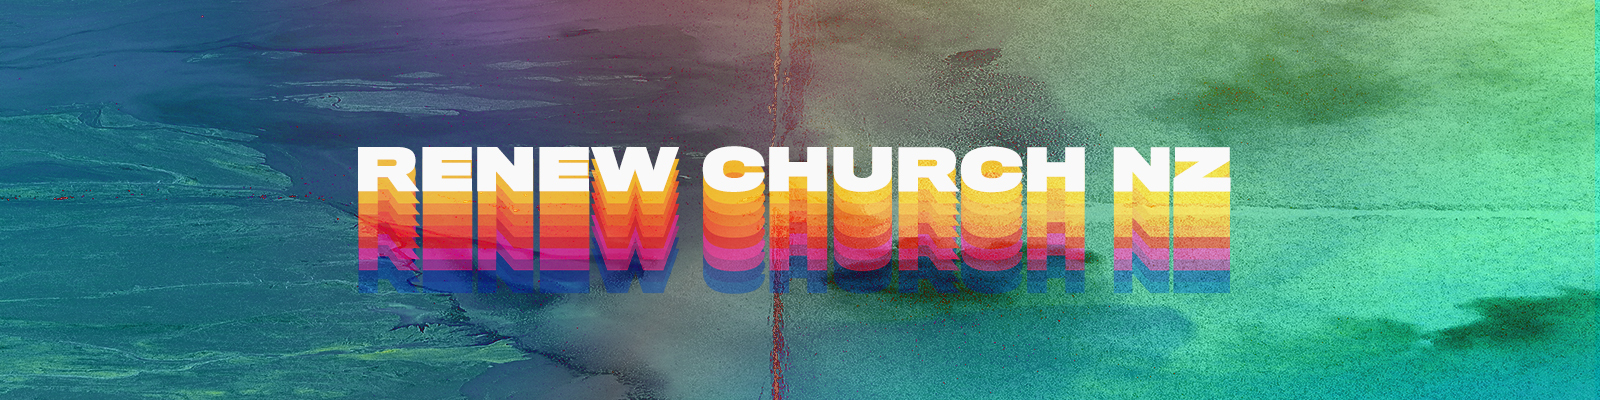 Renew Church NZ